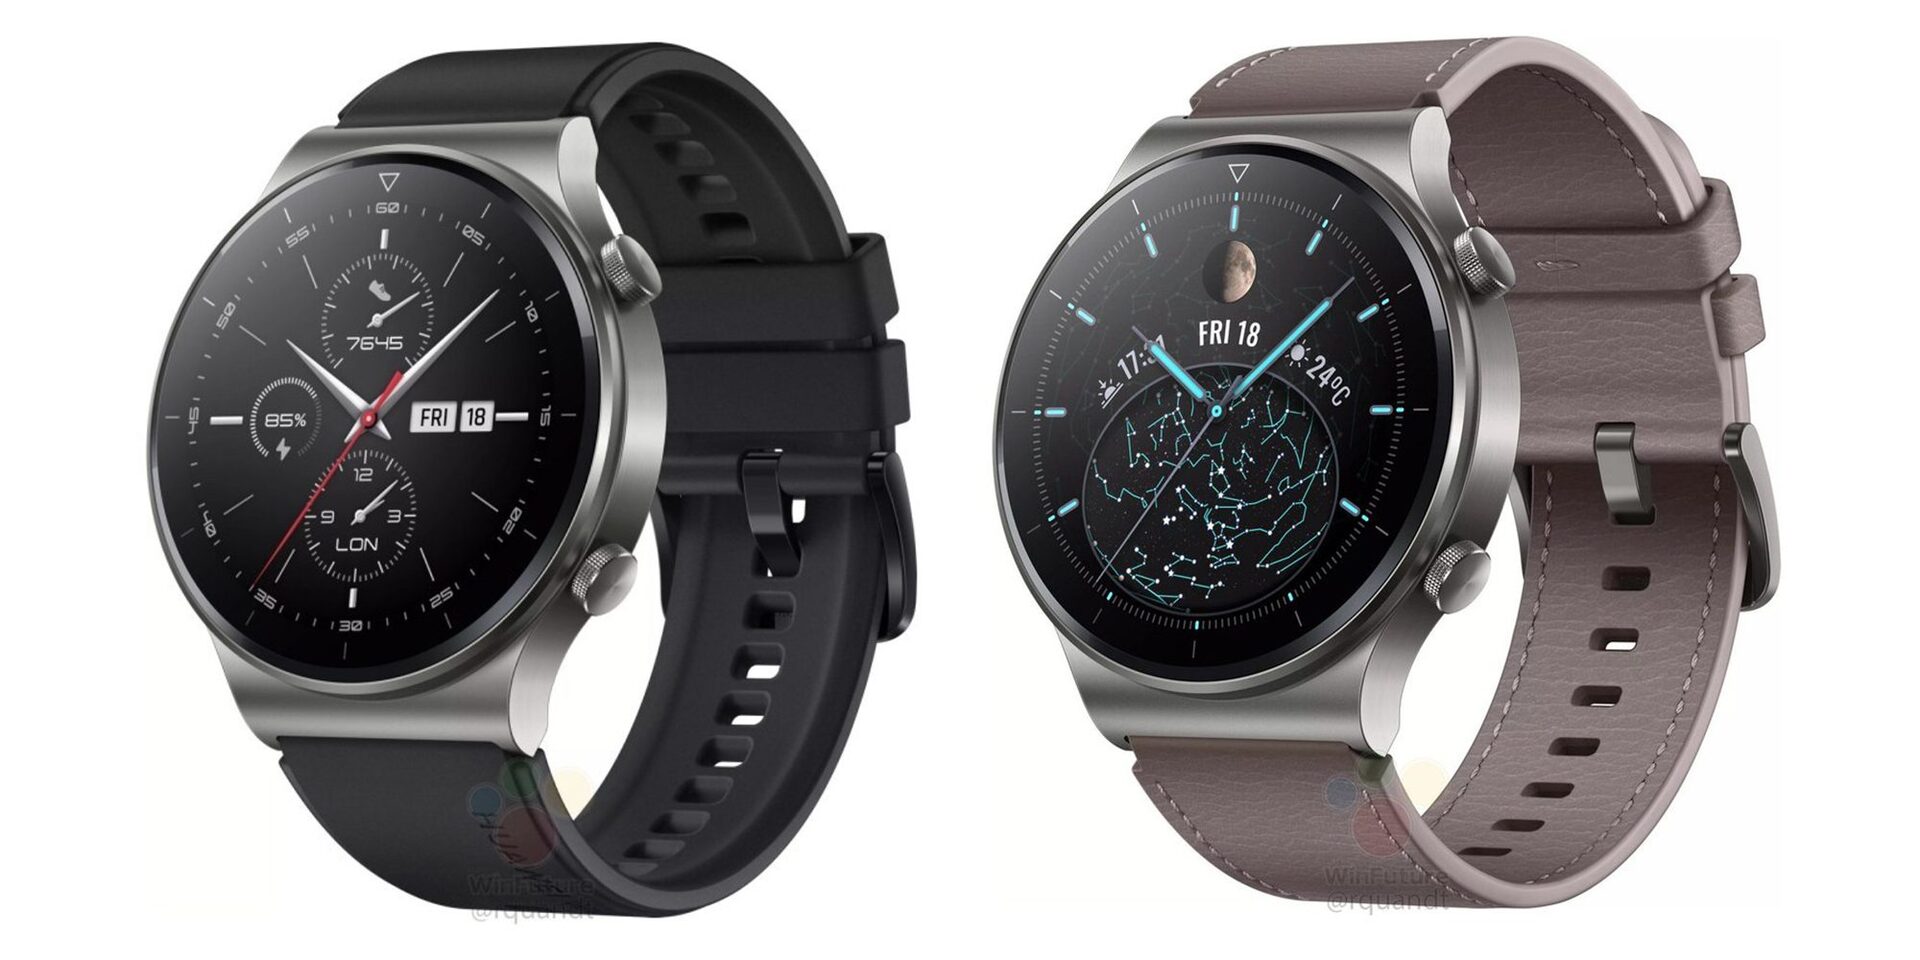 Huawei Watch GT 2 Pro – R$ 1.165,63 (modelo preto da versão global)